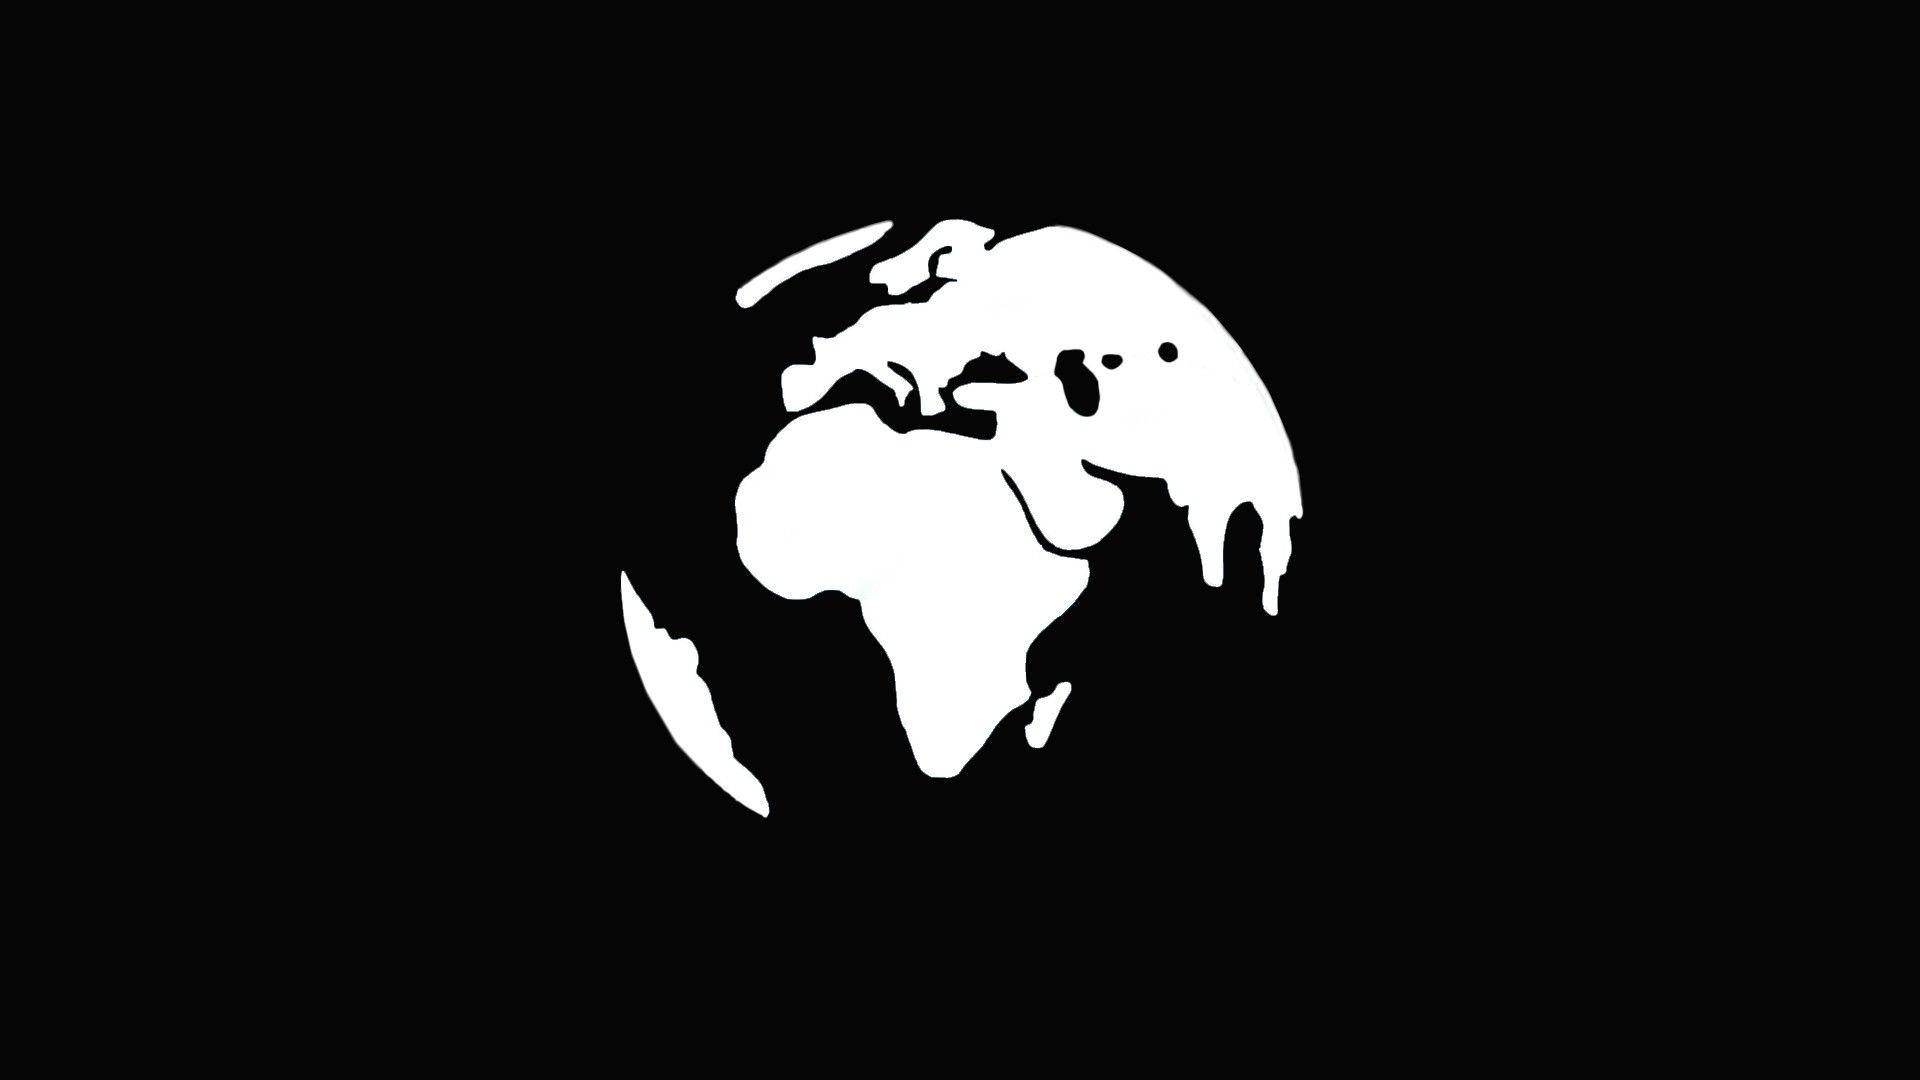 Cartoon Earth Logo - Wallpaper : illustration, black background, Asia, minimalism ...